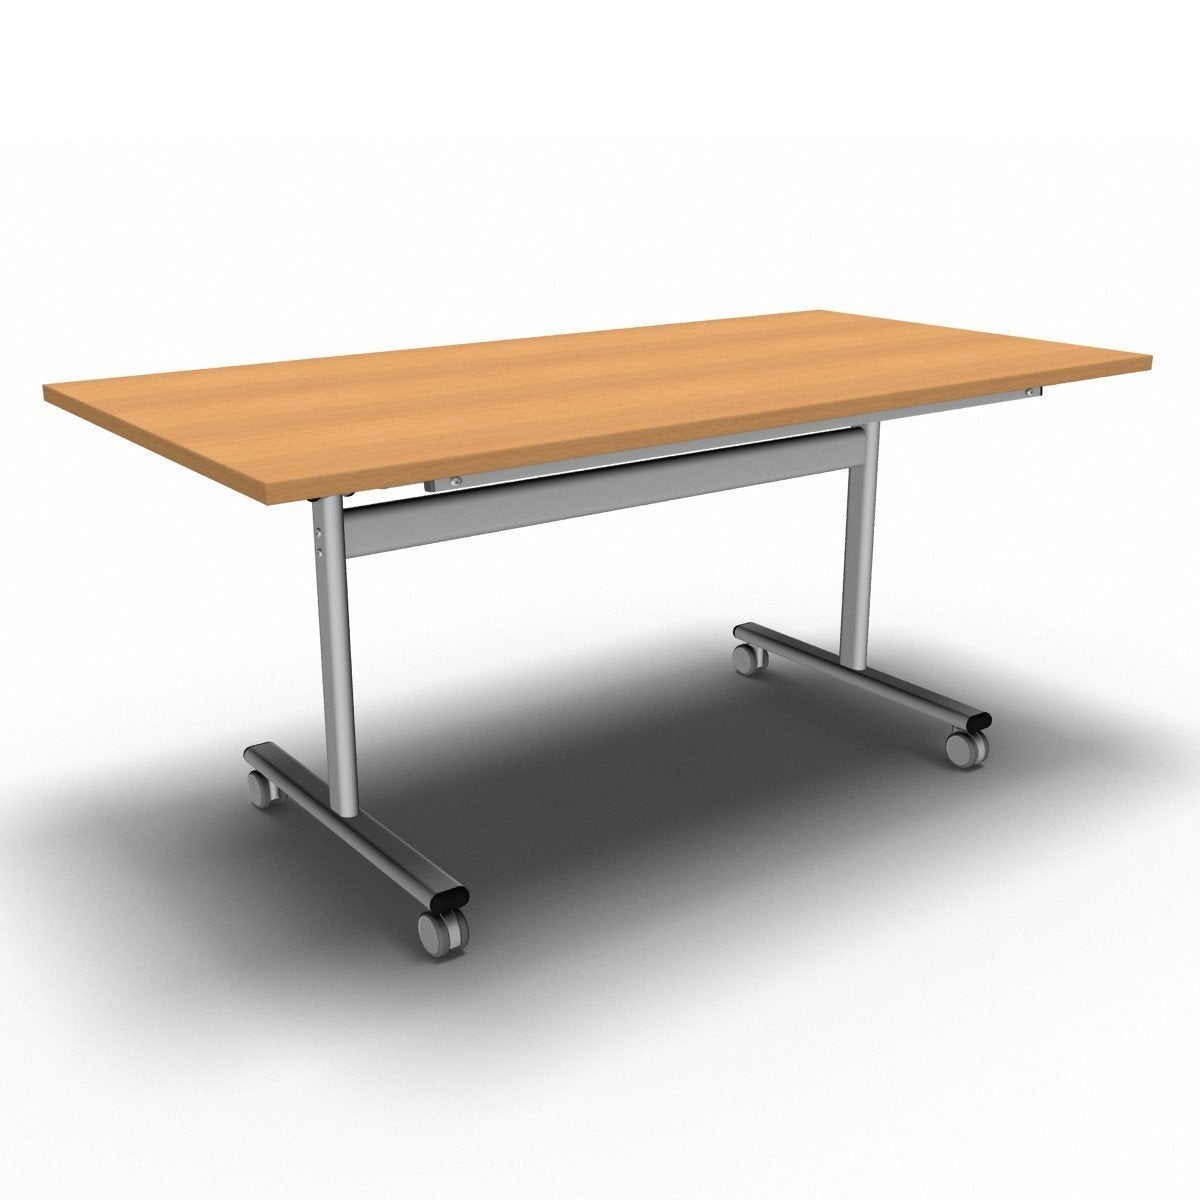 Table 1600 x 800 x 720mm / Rectangular / Beech Synergy Flip Top Tables